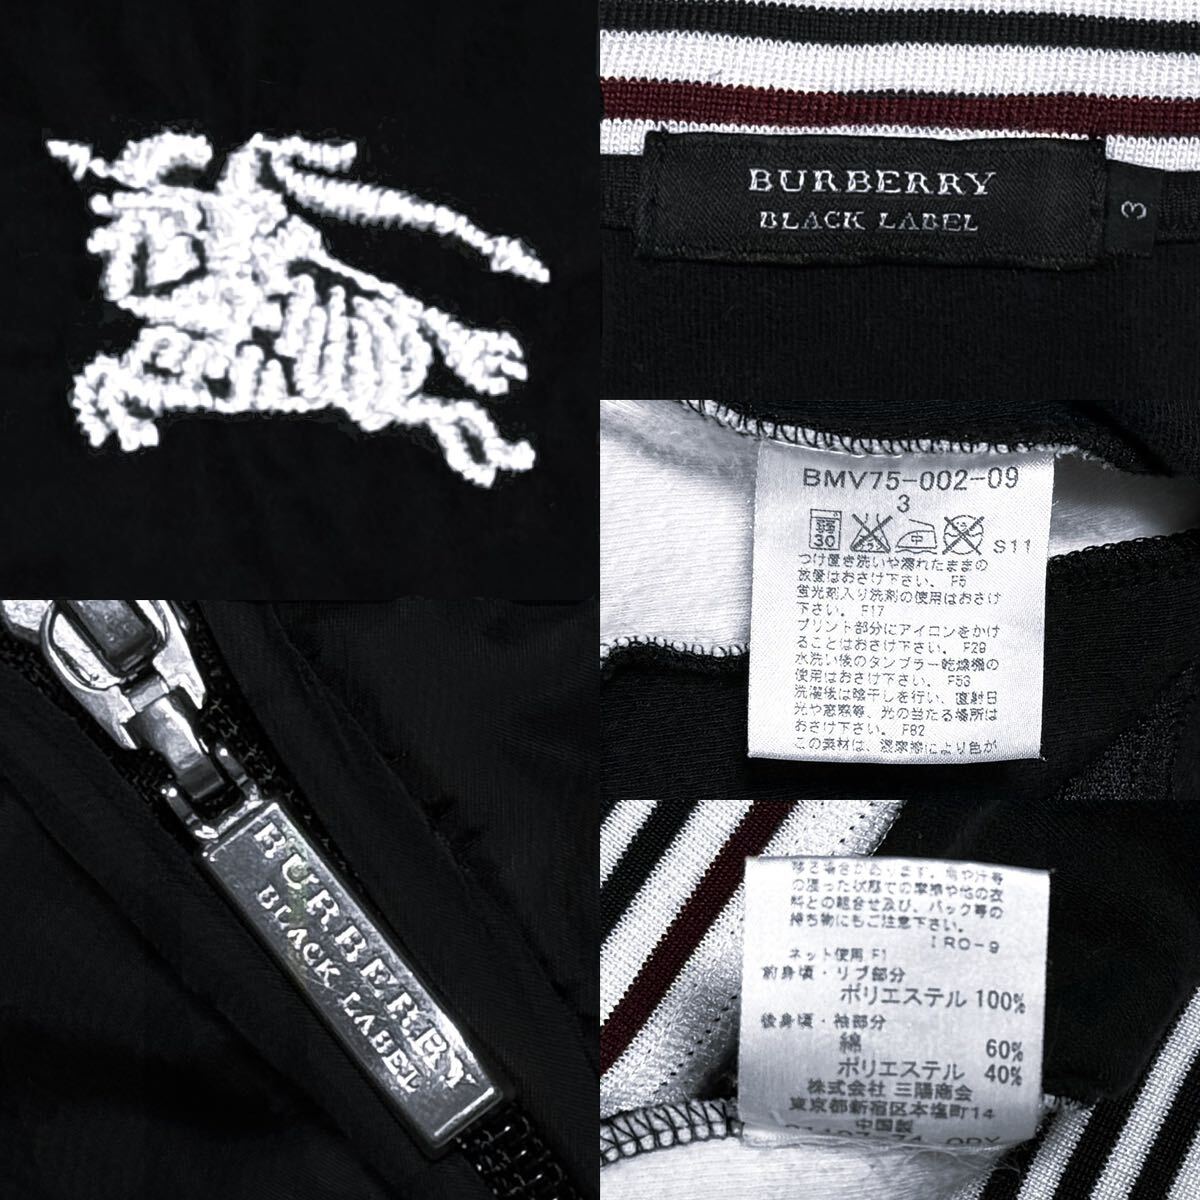  beautiful goods Burberry Black Label hose embroidery noba border sleeve line jersey 3/L black jersey blouson BURBERRY BLACK LABEL